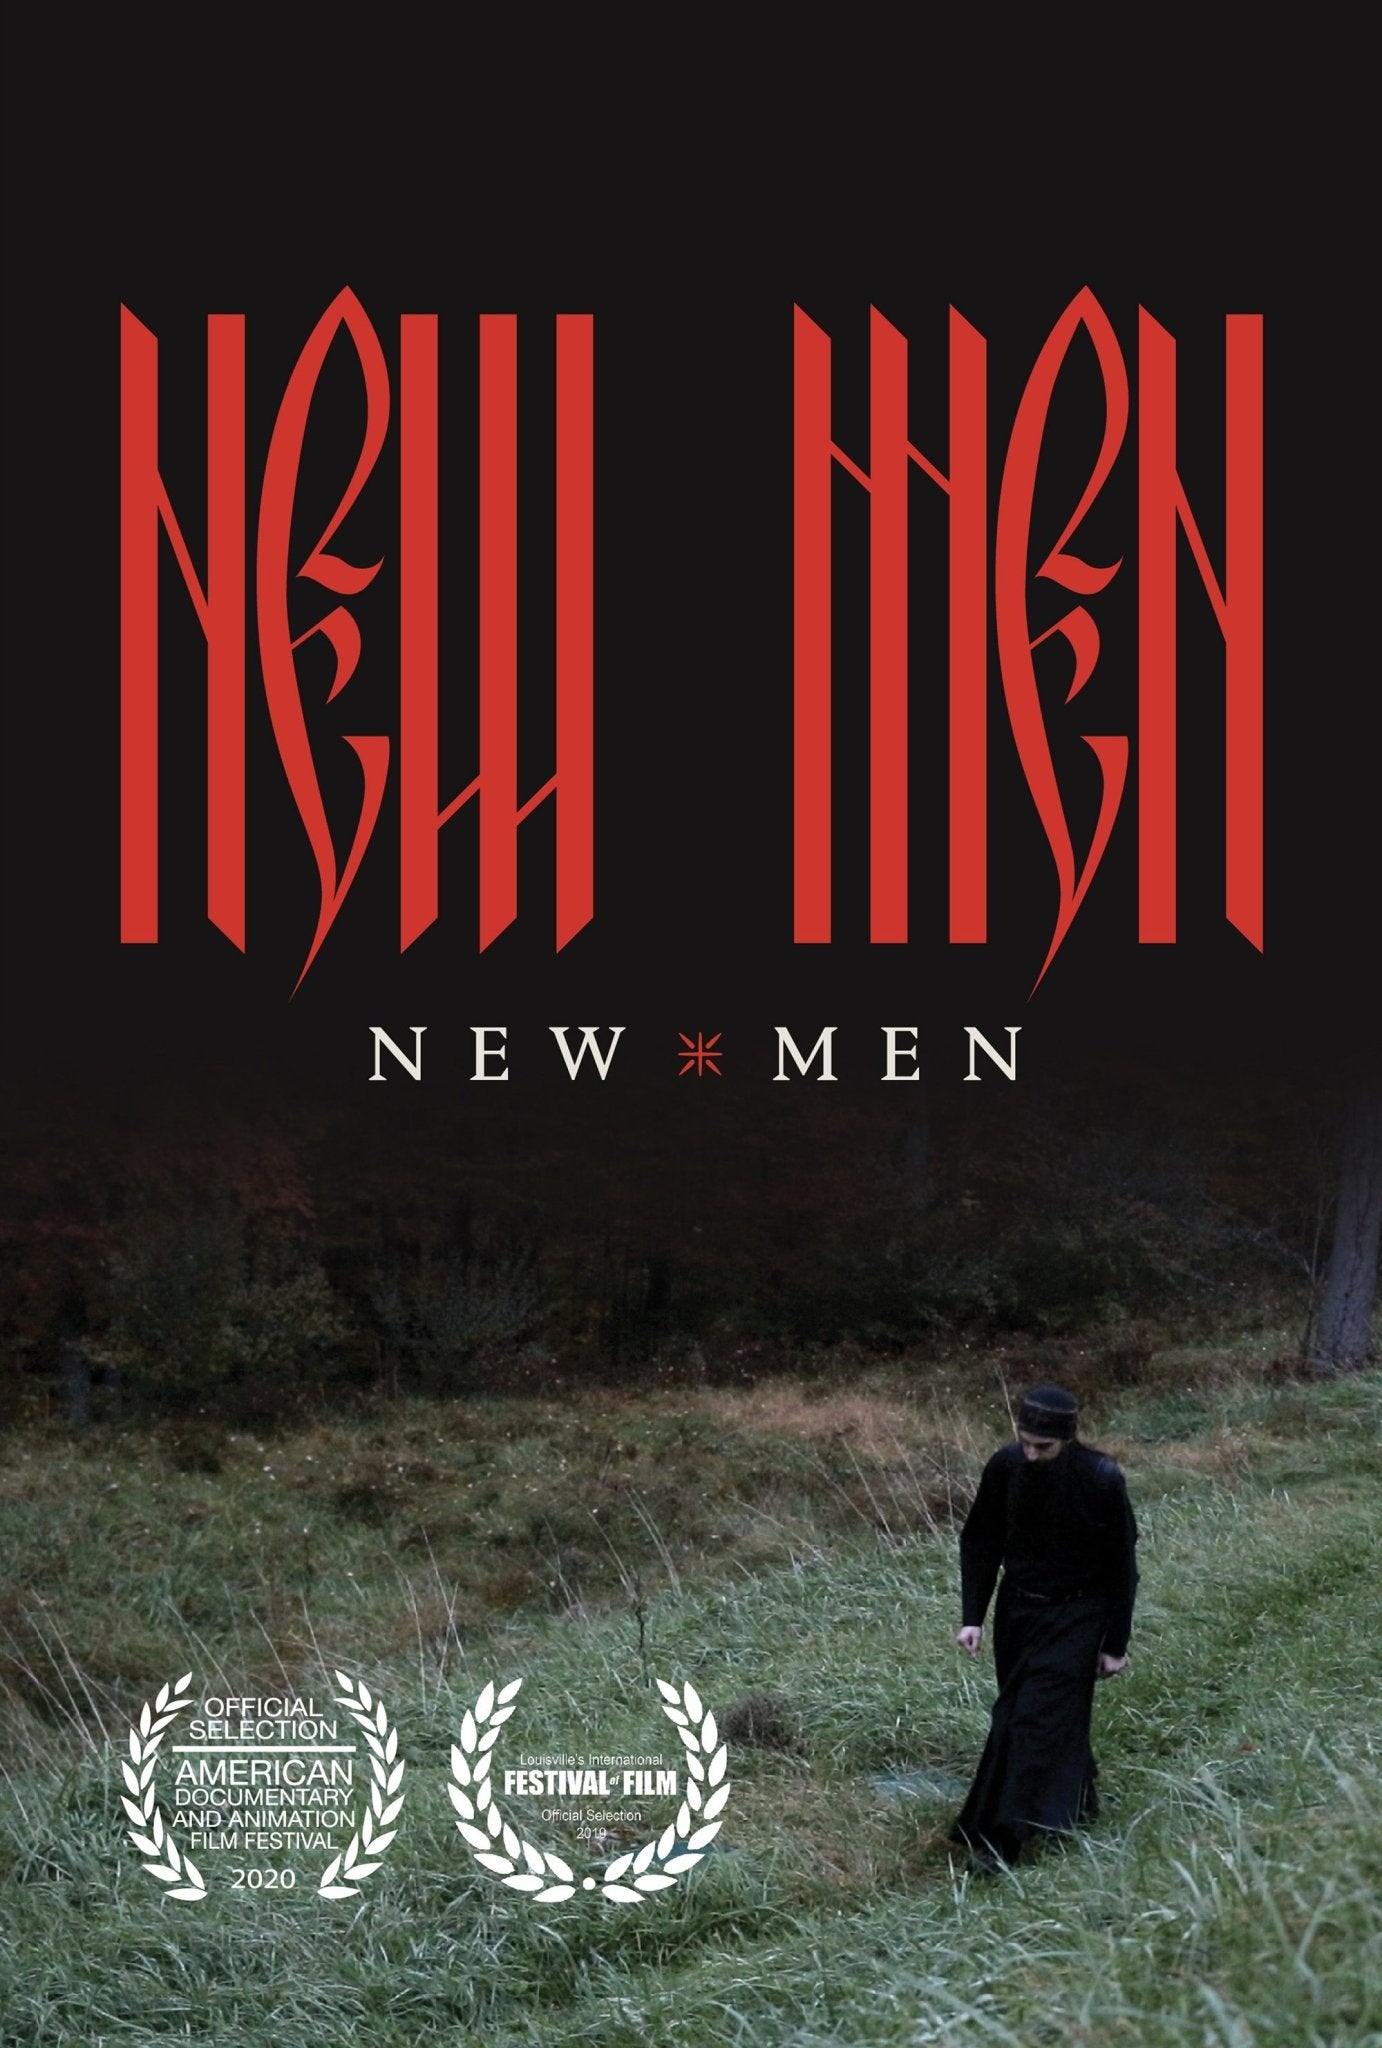 'New Men' Film Coming Soon